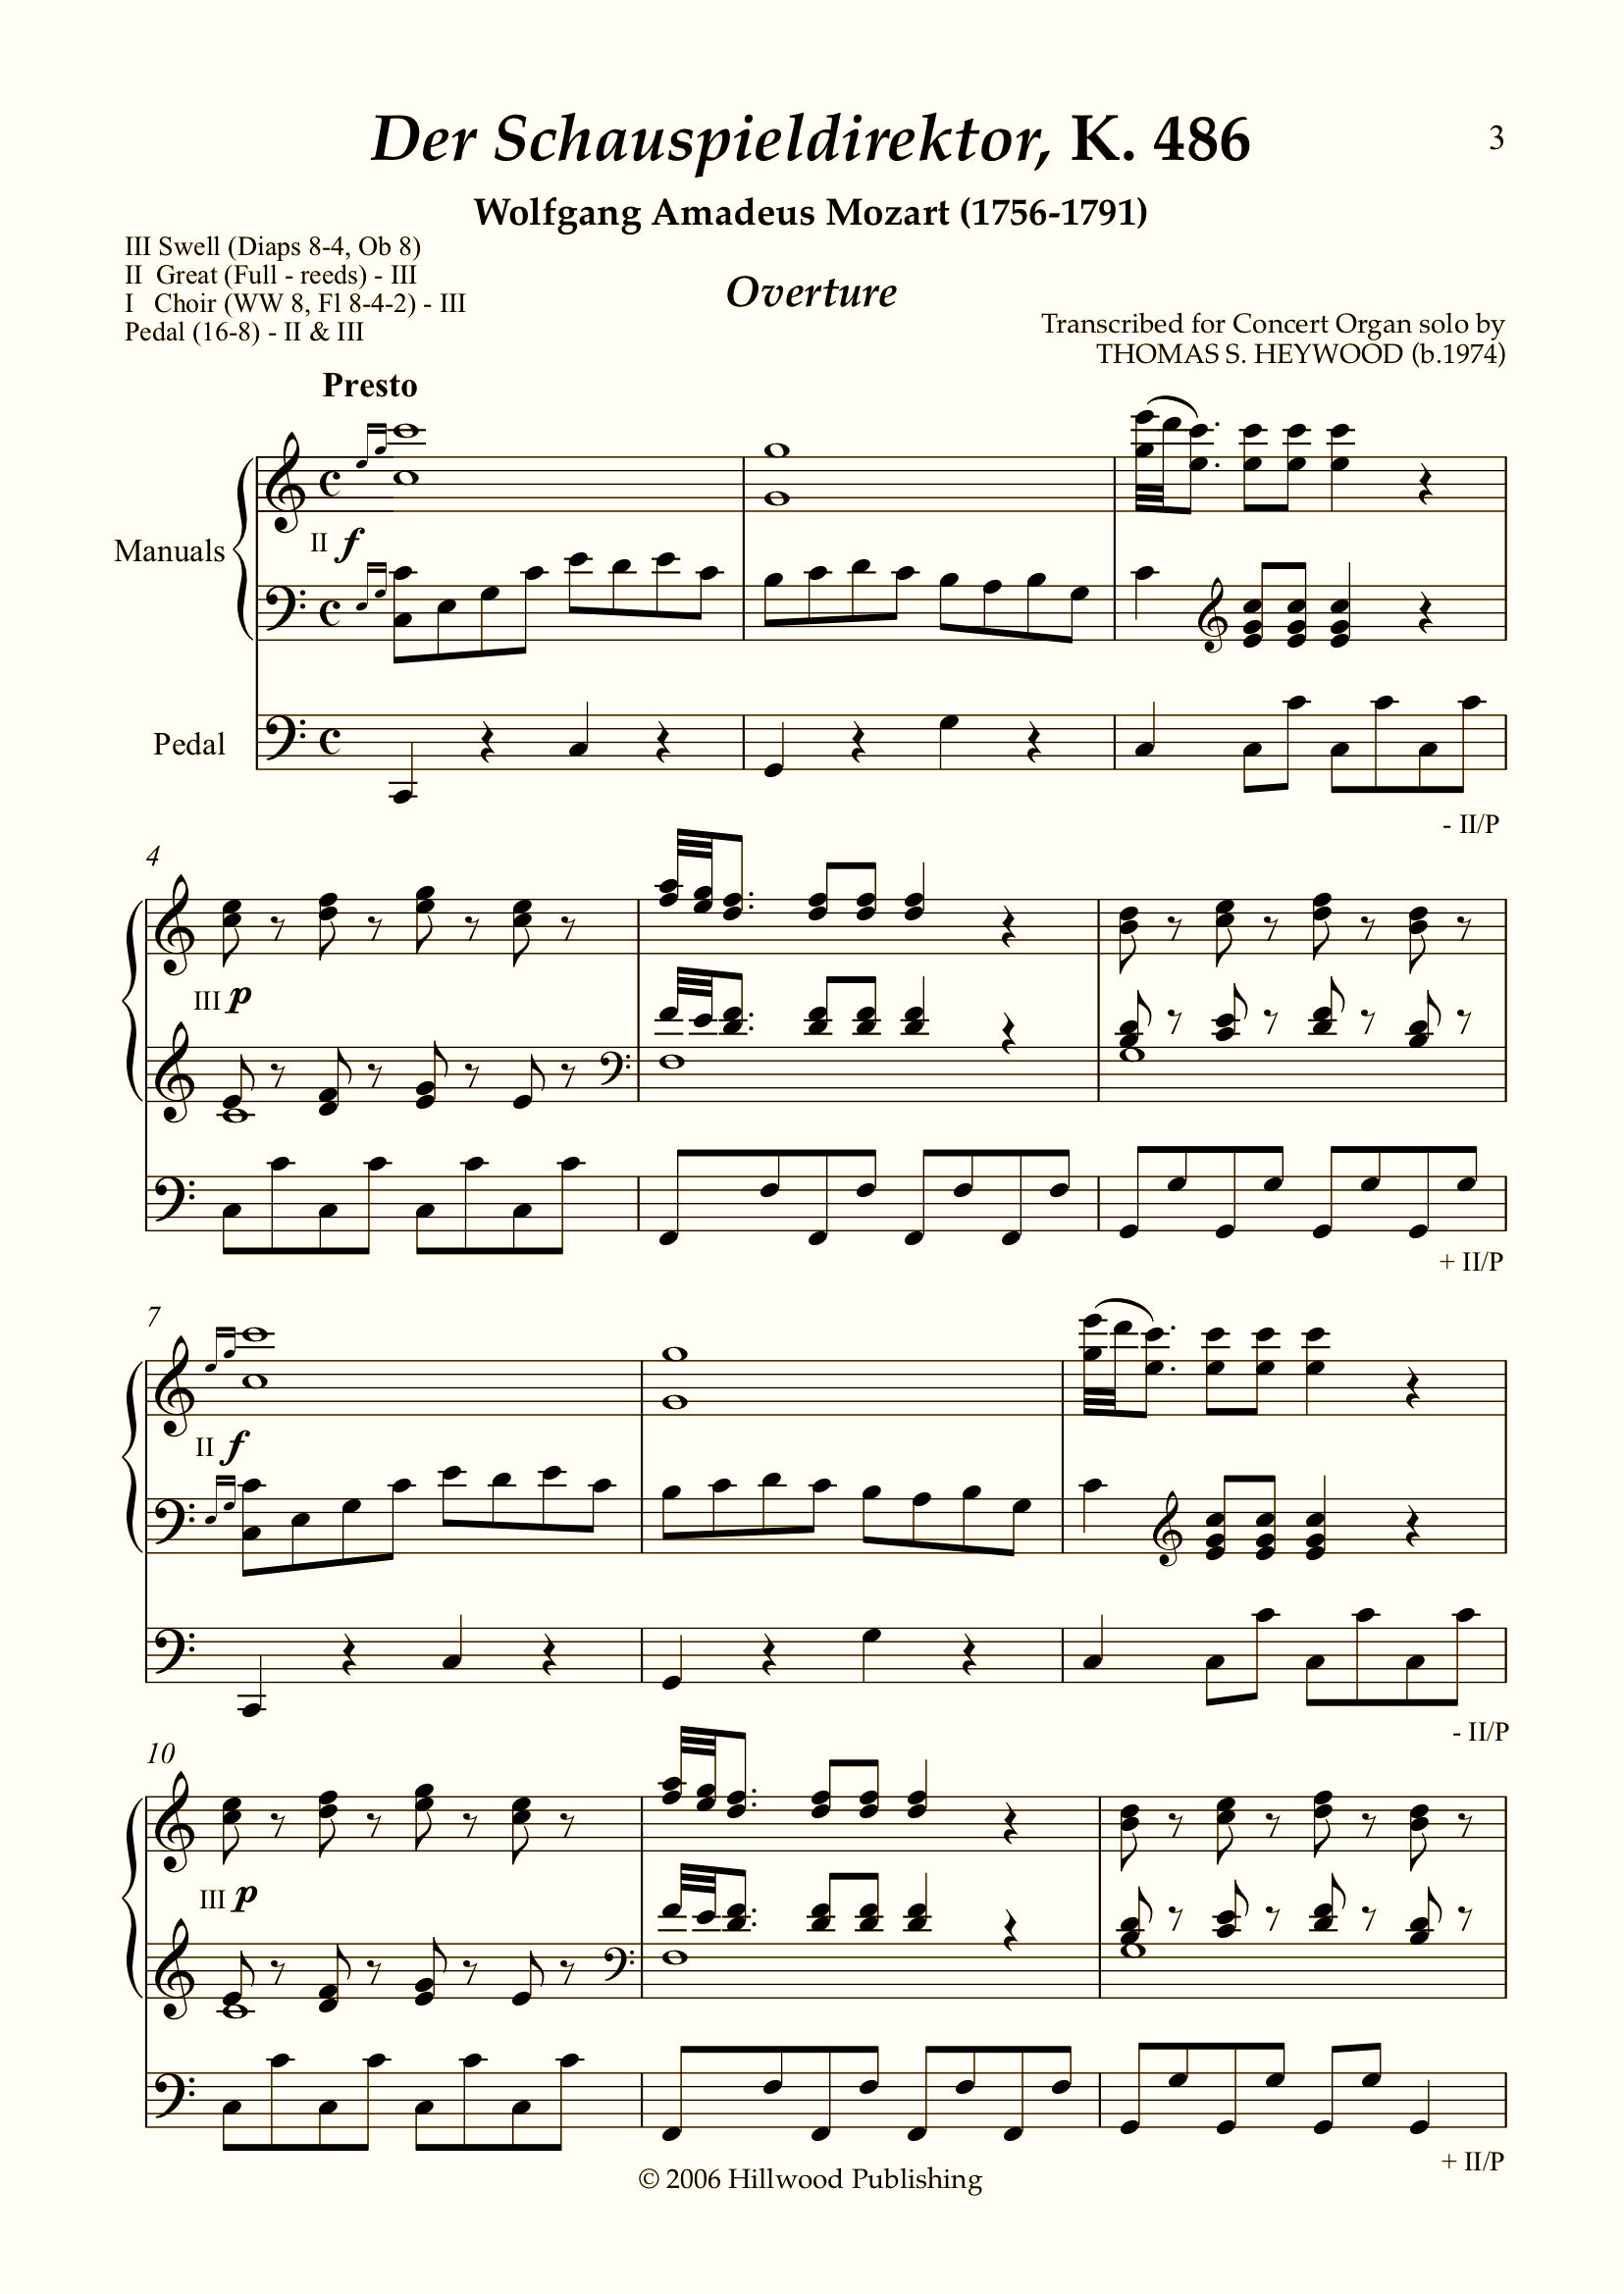 Mozart/Heywood - Overture to The Impresario, K. 486 (Score) | Thomas Heywood | Concert Organ International